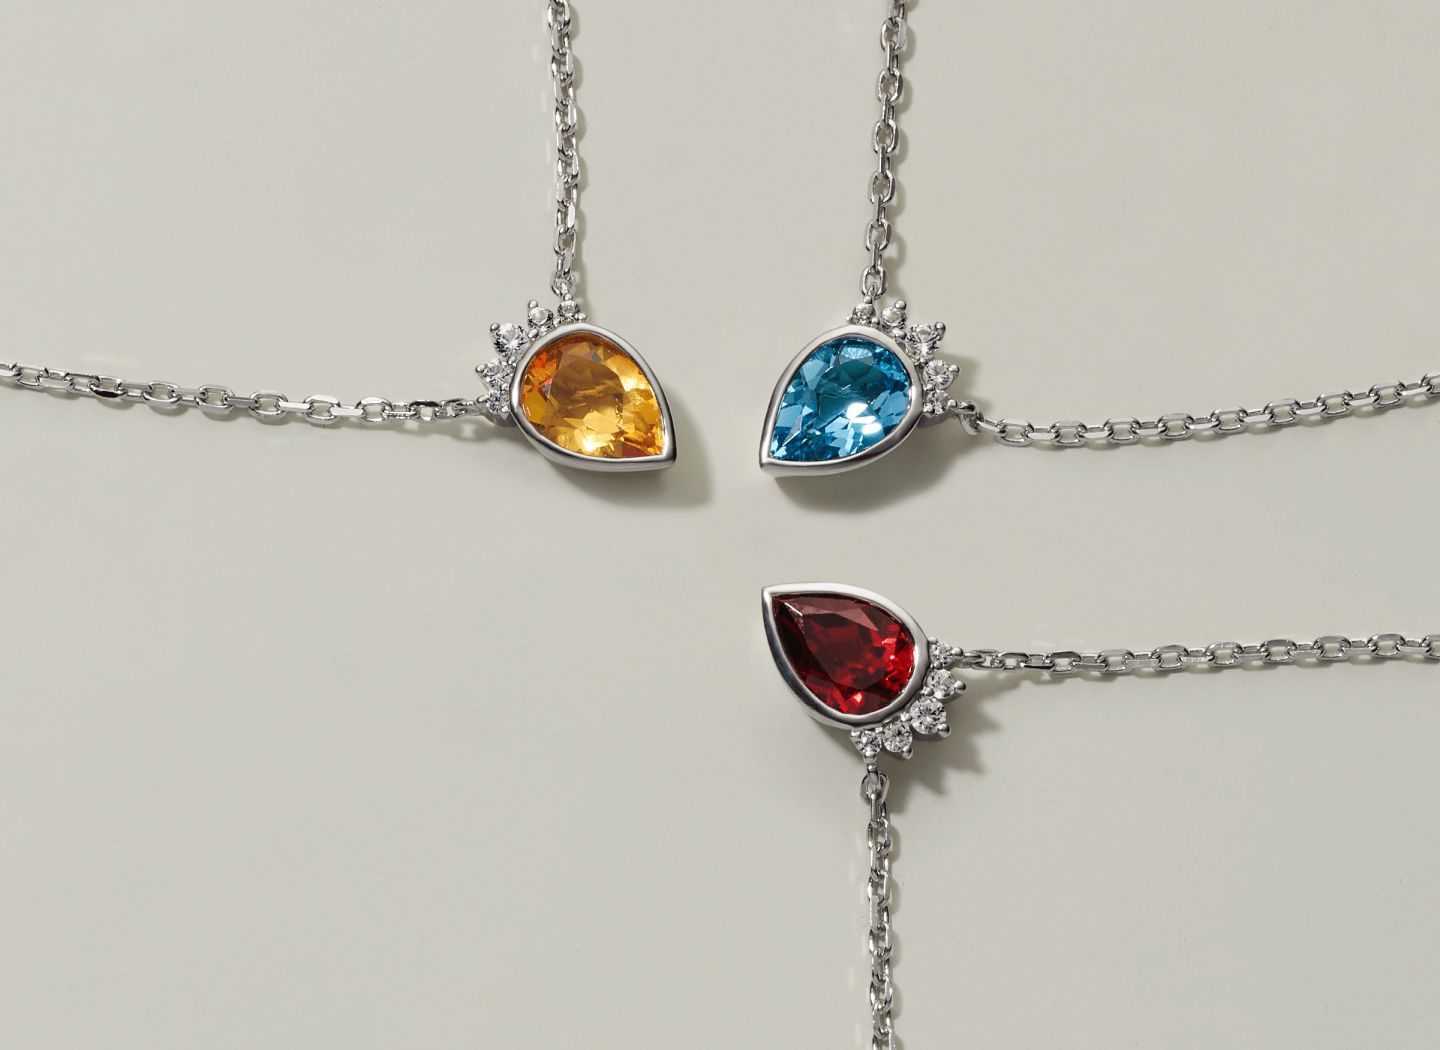 3 gemstone pendants of different colors